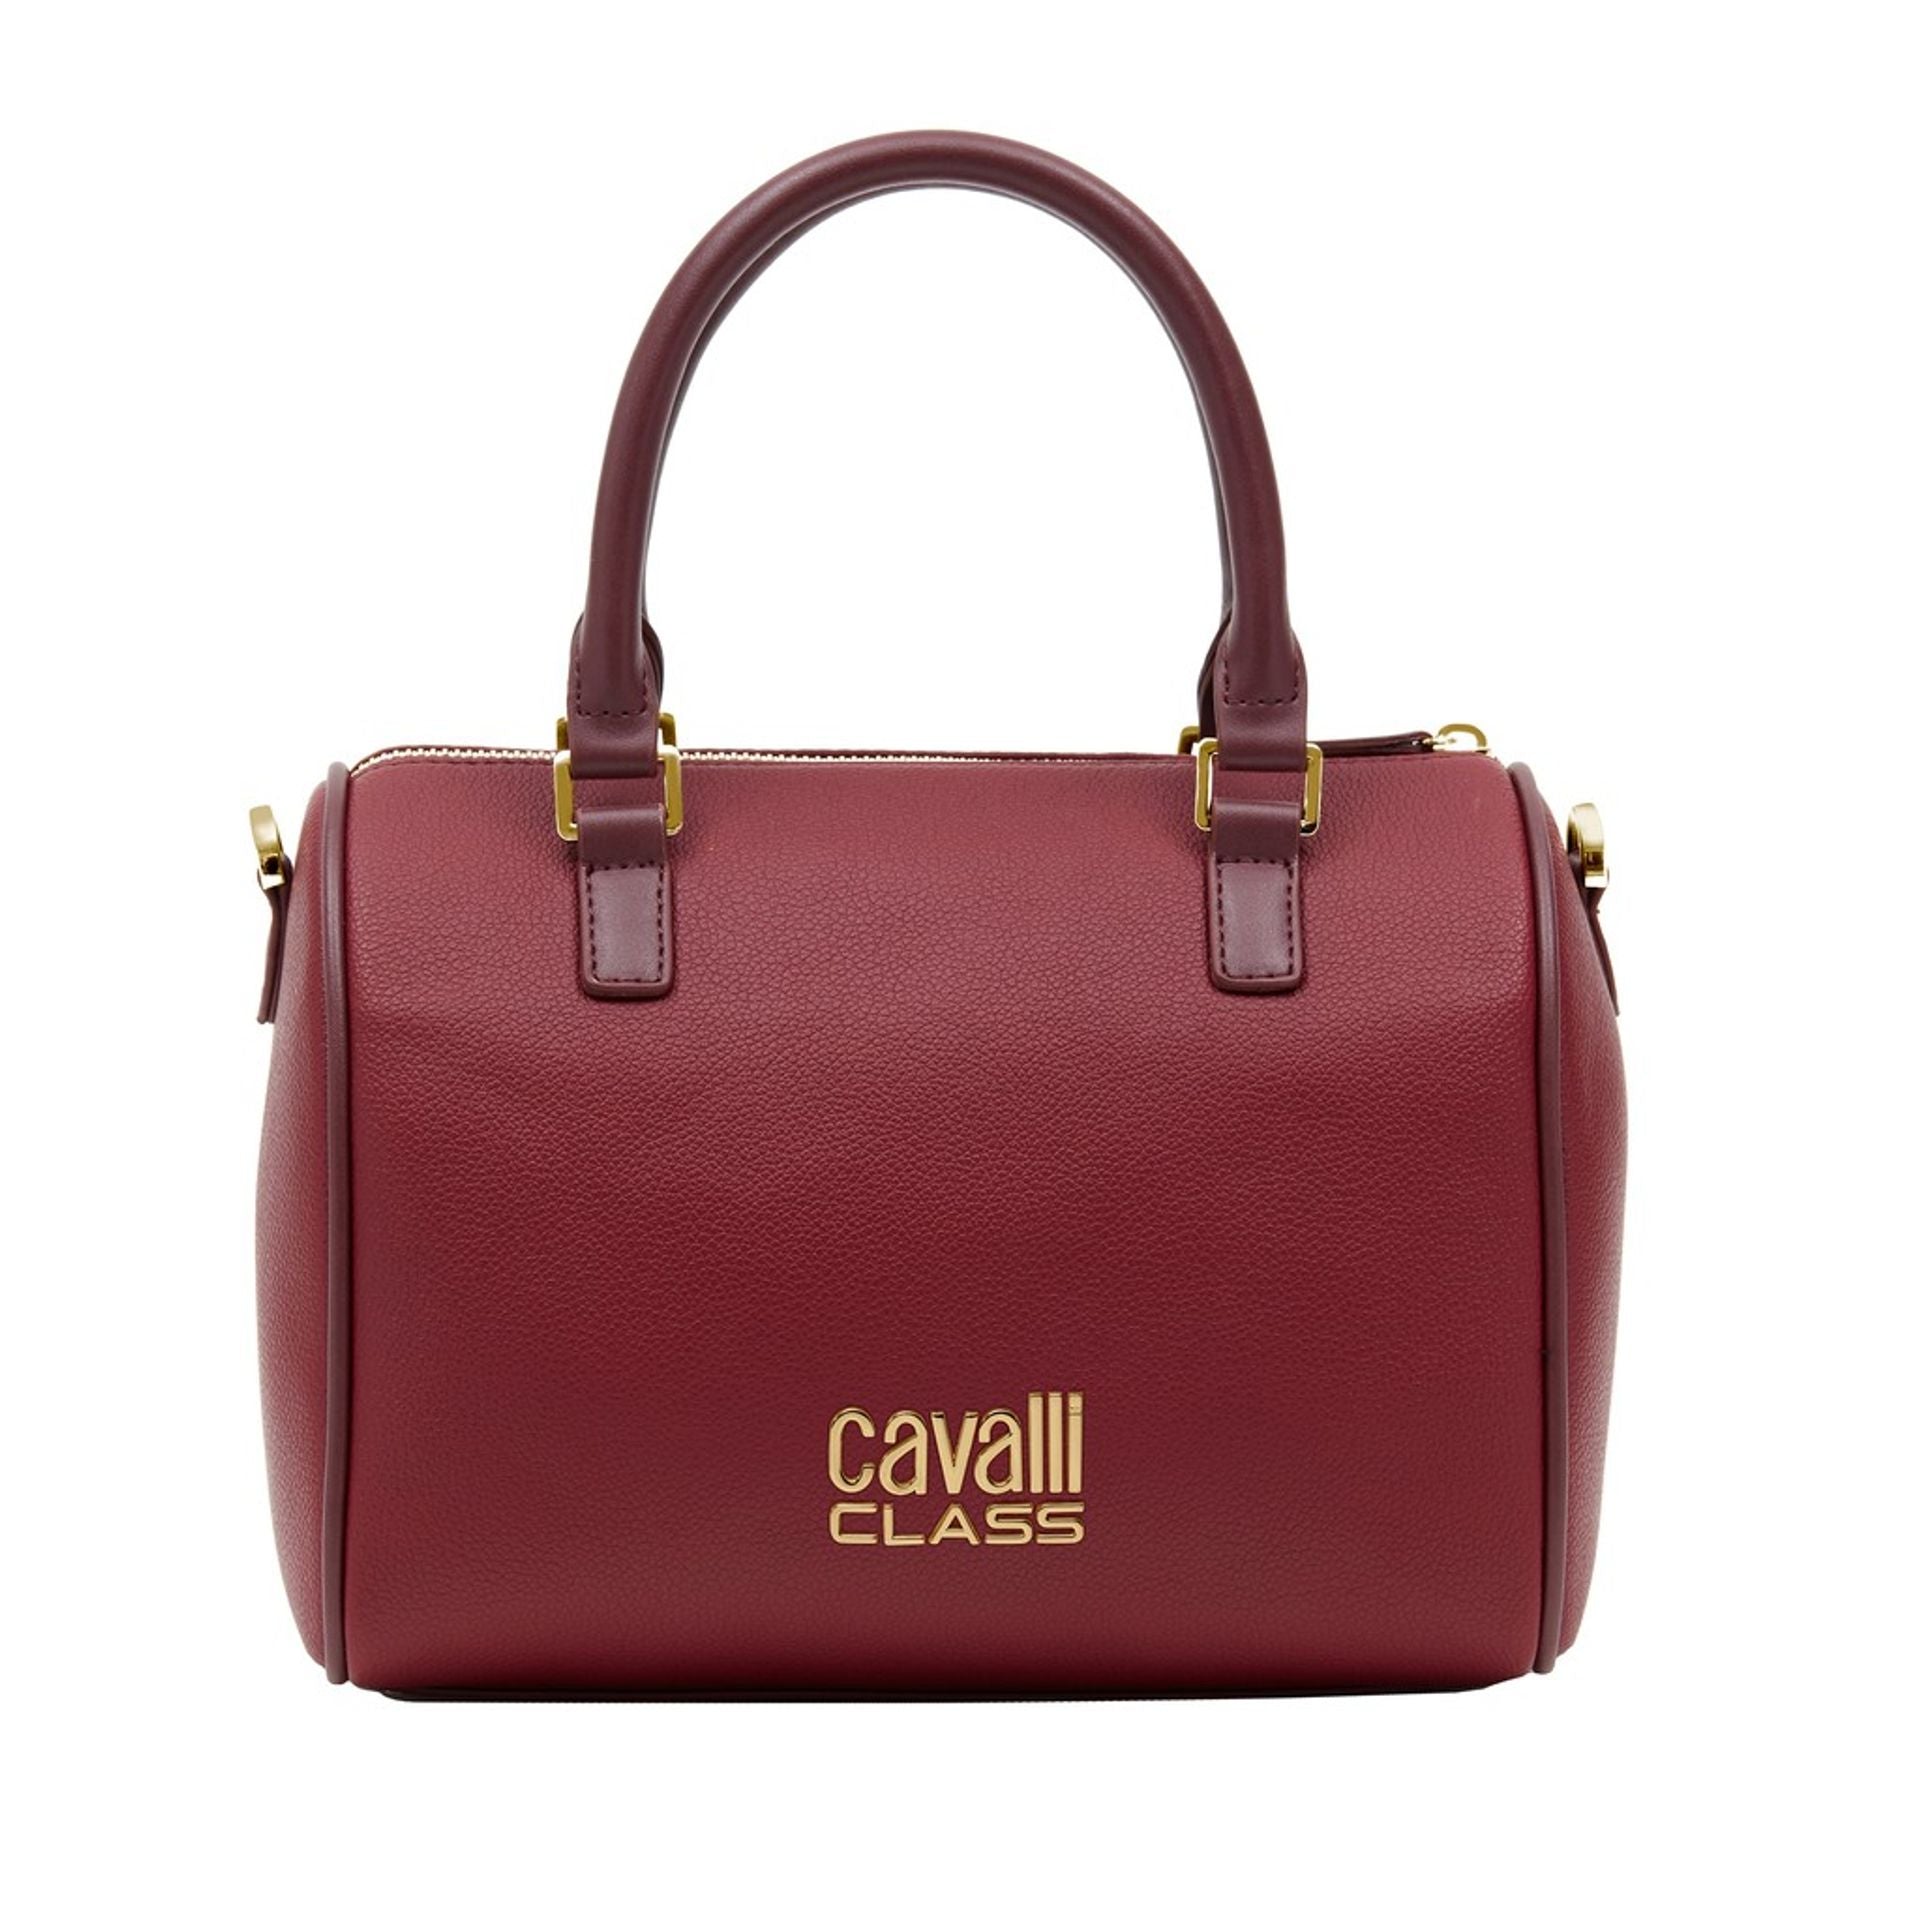 Cavalli Class Handbags